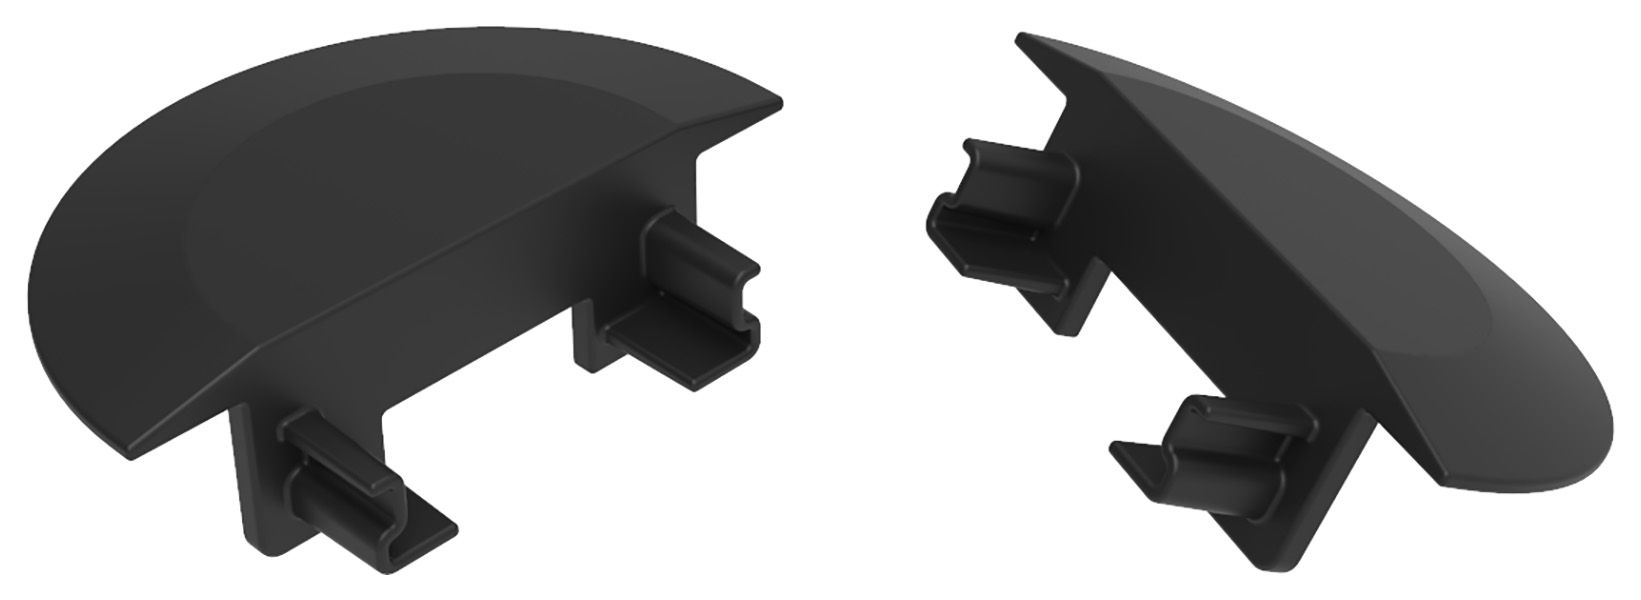 Image of Sensio Black End Caps for Mackay Profiles (2 end caps)